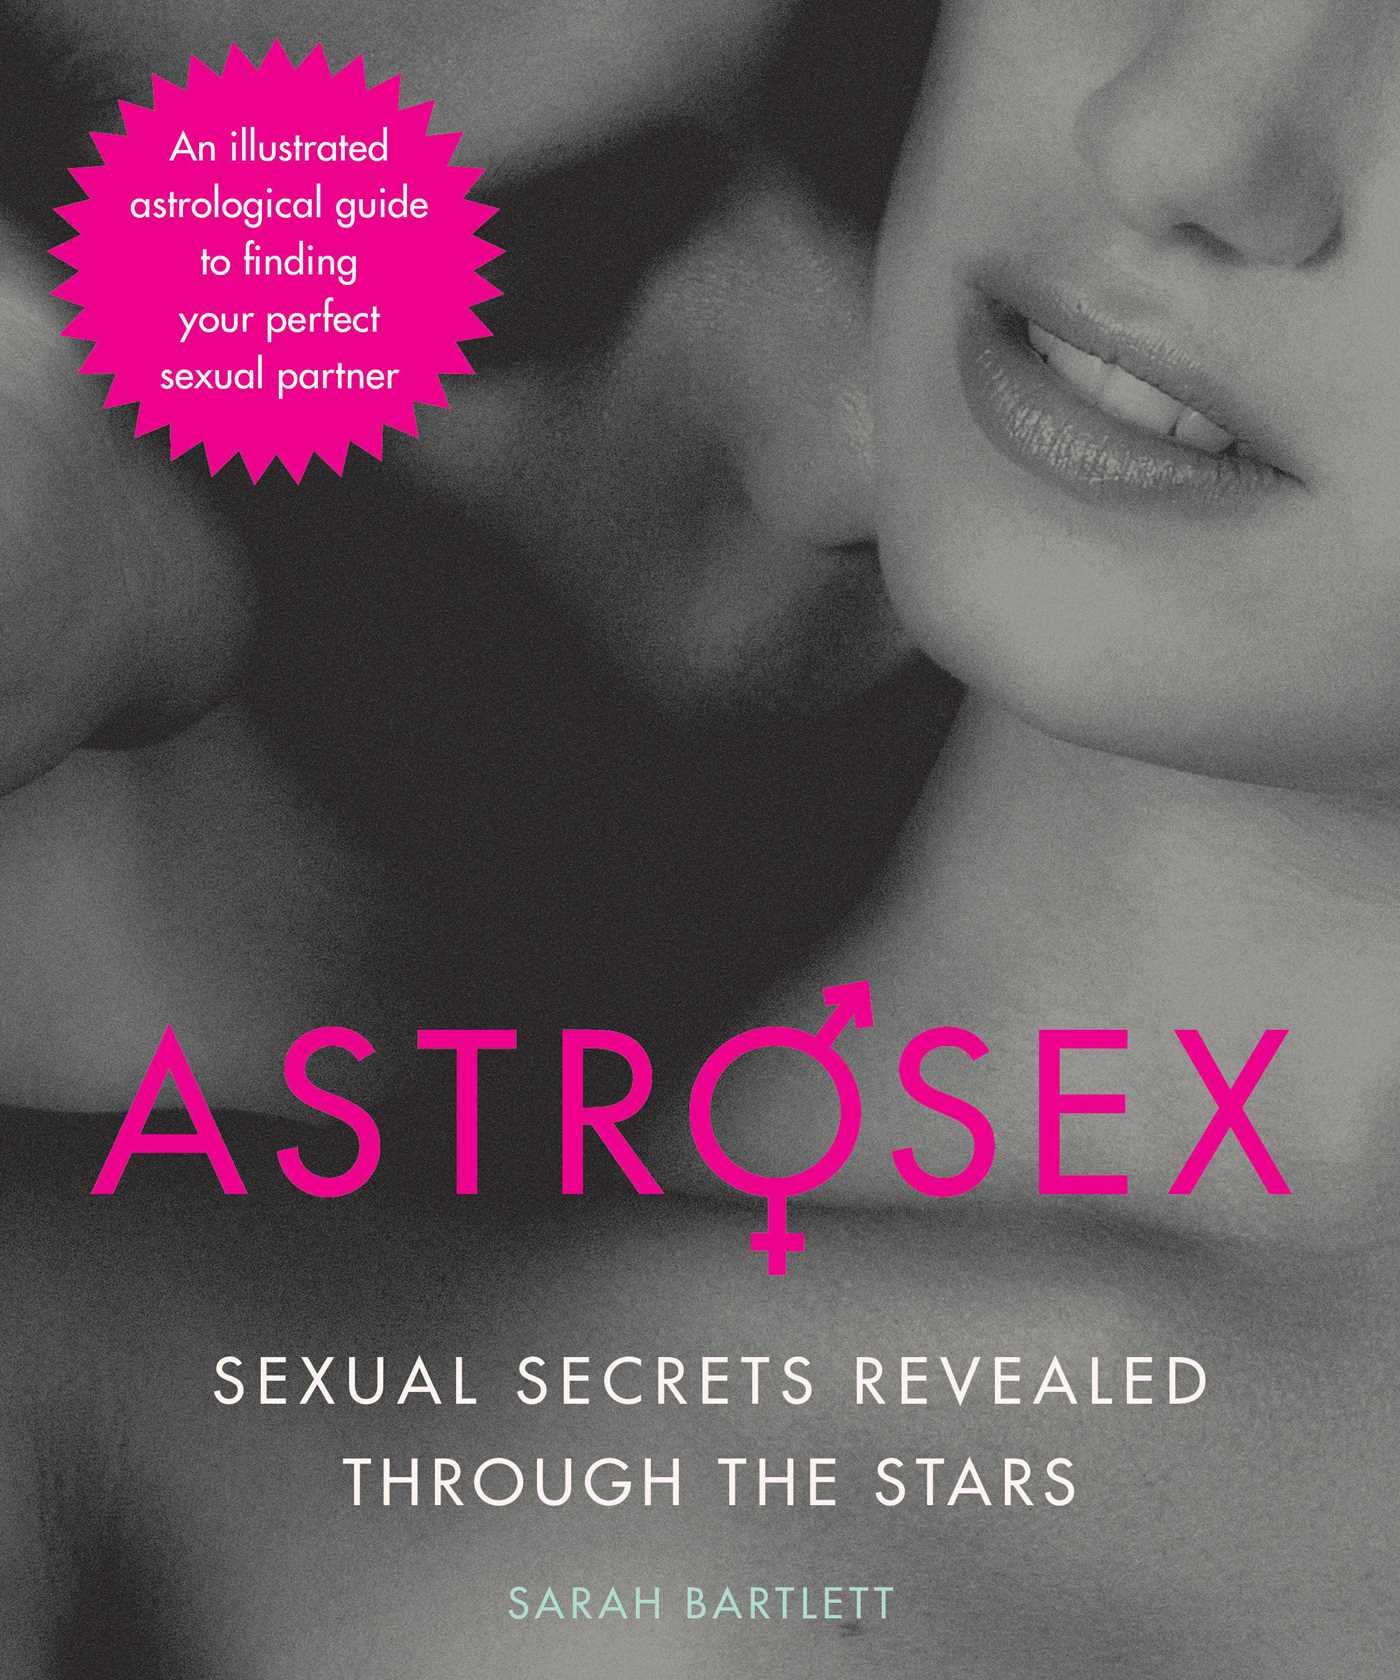 Astrosex Sexual Secrets Revealed through the Stars by Sarah Bartlett